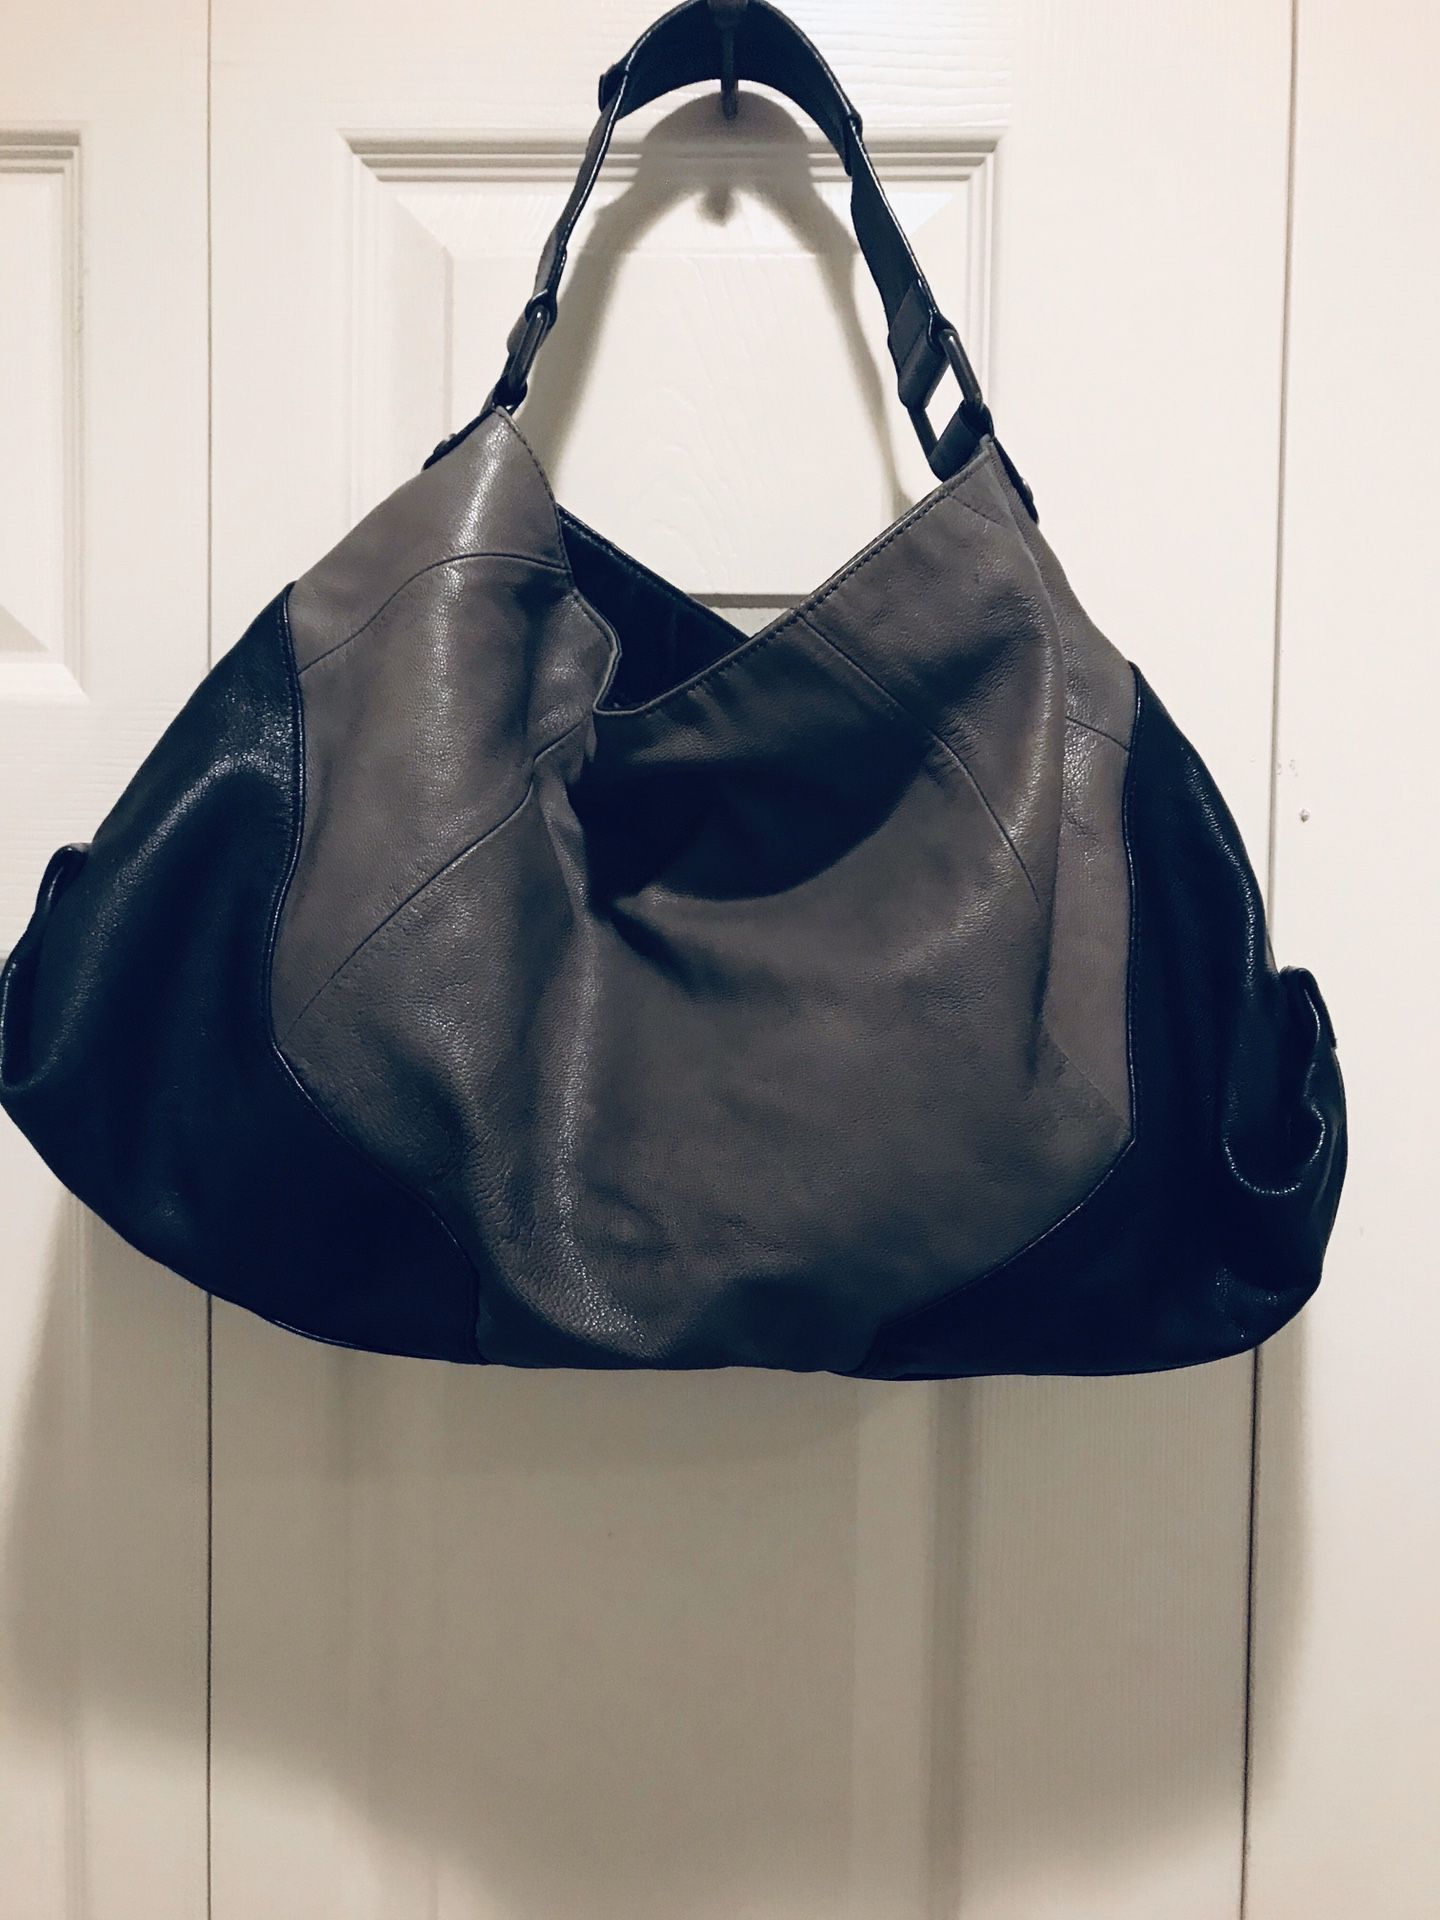 Hobo genuine leather bag “Kenneth Cole”